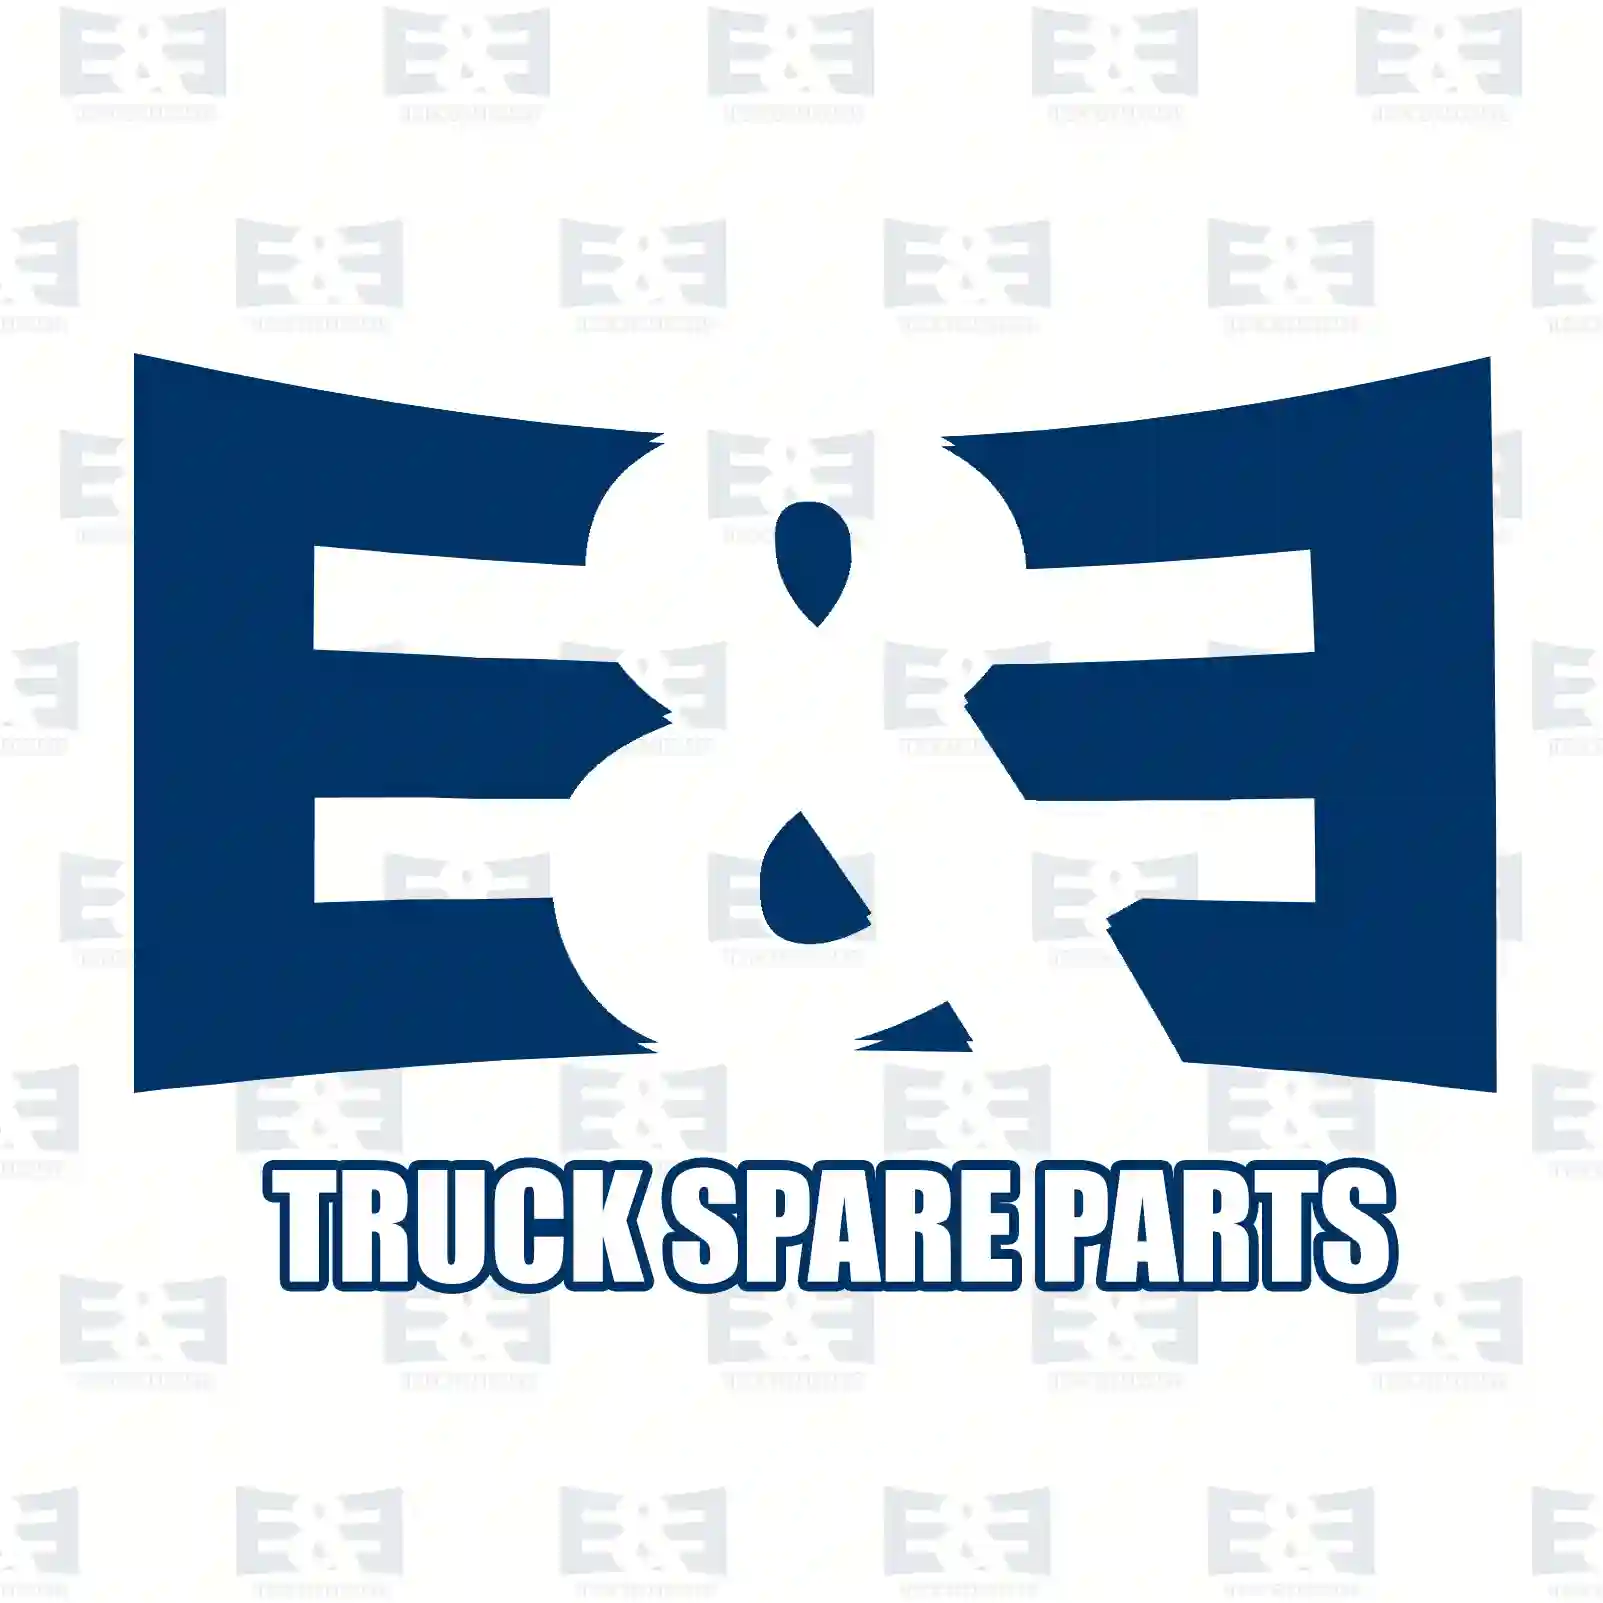 Clutch disc, 2E2289121, 7421695971, 22878951, 21695963, 85013743, ZG30301-0008 ||  2E2289121 E&E Truck Spare Parts | Truck Spare Parts, Auotomotive Spare Parts Clutch disc, 2E2289121, 7421695971, 22878951, 21695963, 85013743, ZG30301-0008 ||  2E2289121 E&E Truck Spare Parts | Truck Spare Parts, Auotomotive Spare Parts